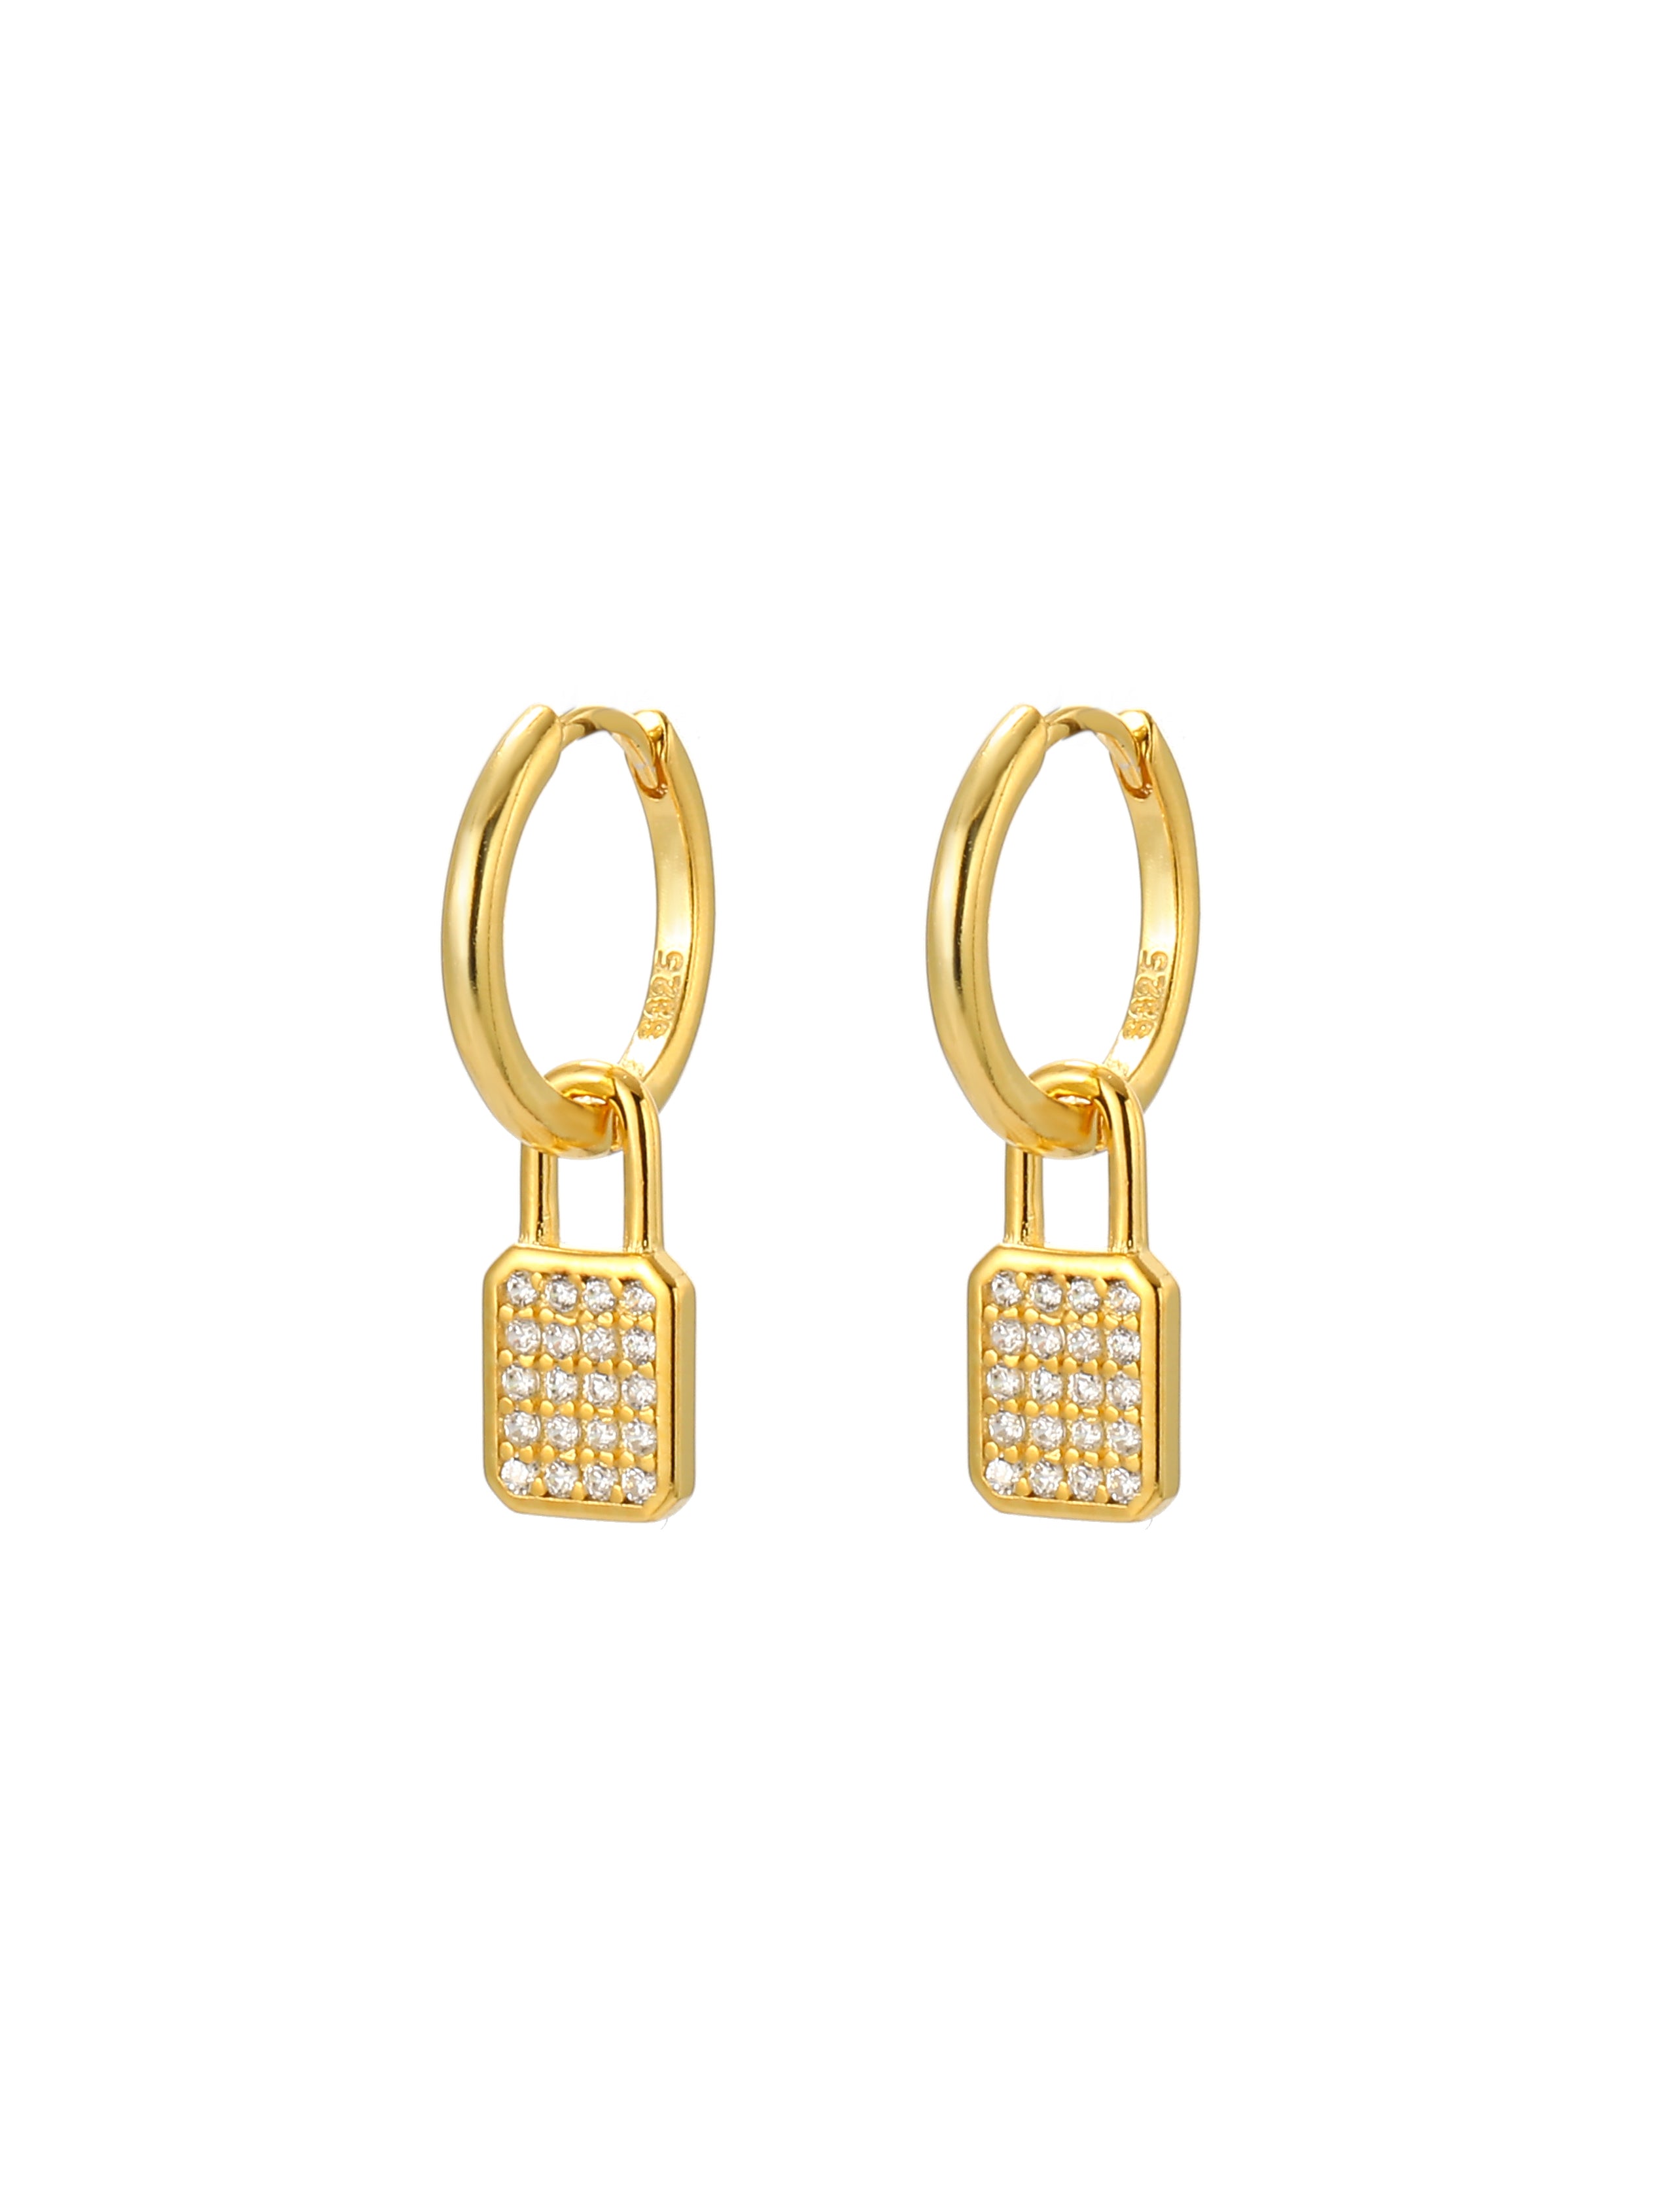 Latest gold U V punjabi baali designs/Gold lock earrings #Earrings #Baali  @JEWELLERYMART - YouTube